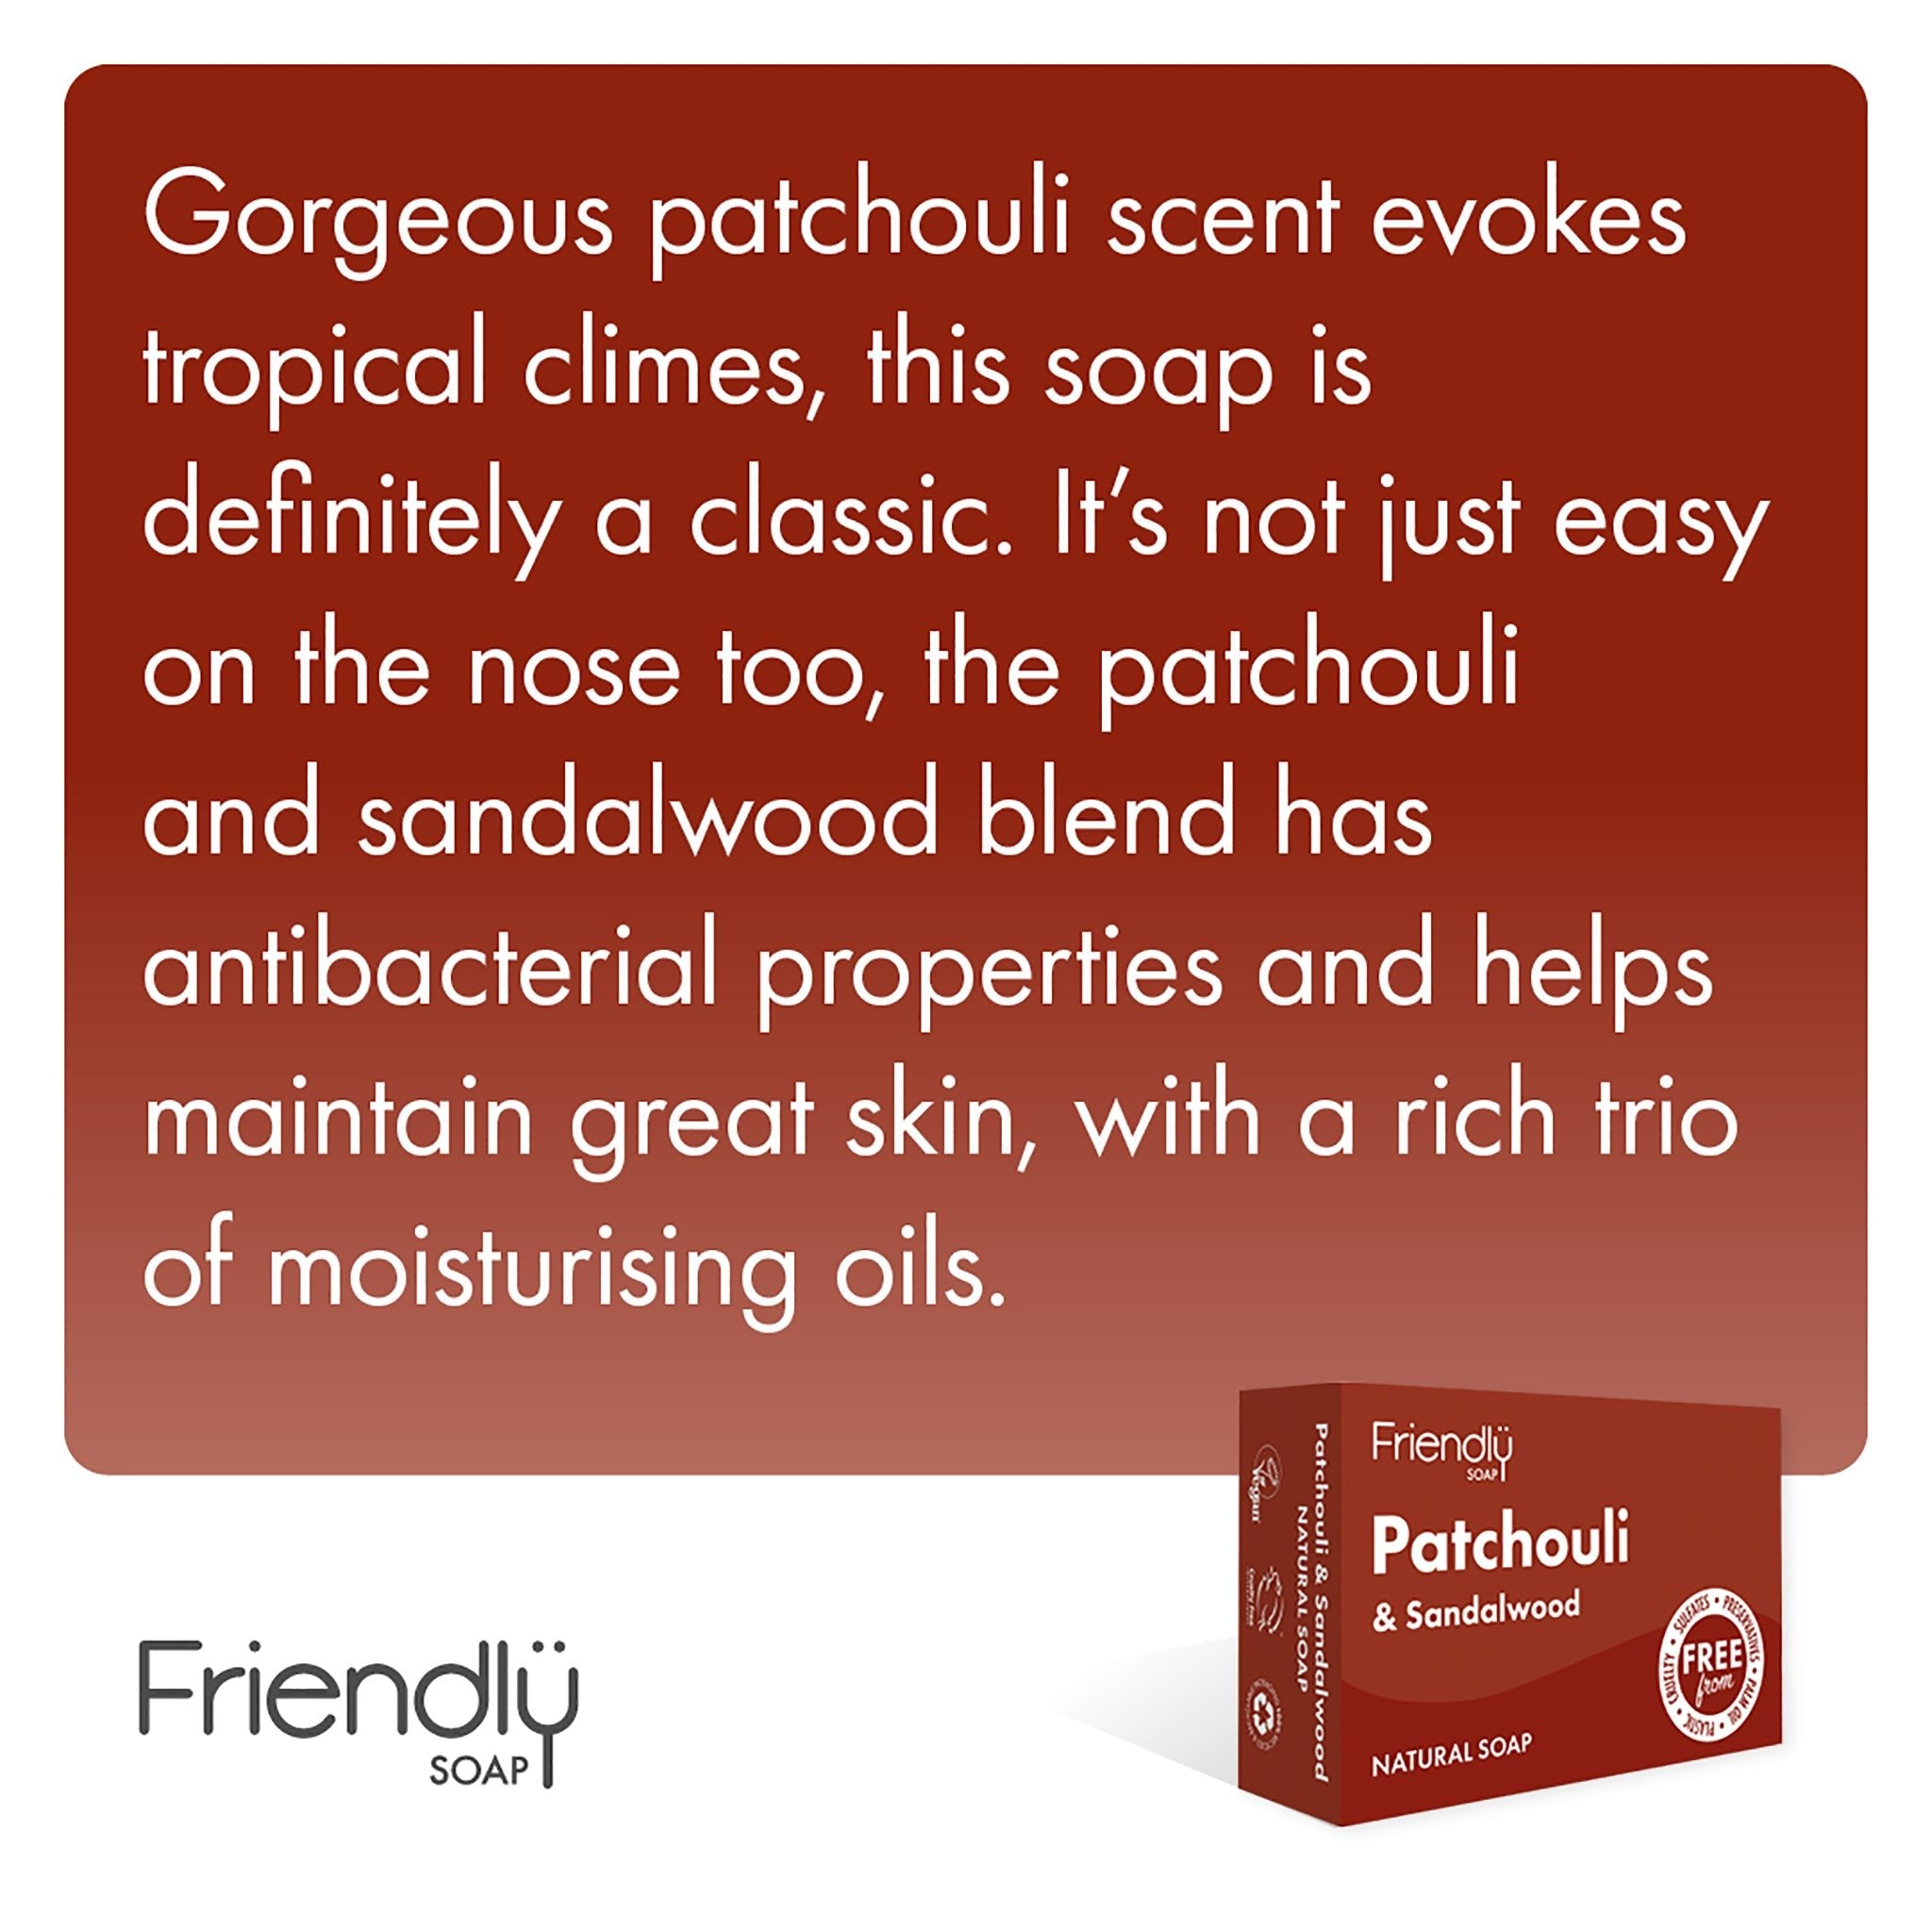 Patchouli & Sandalwood Soap Bar - mypure.co.uk